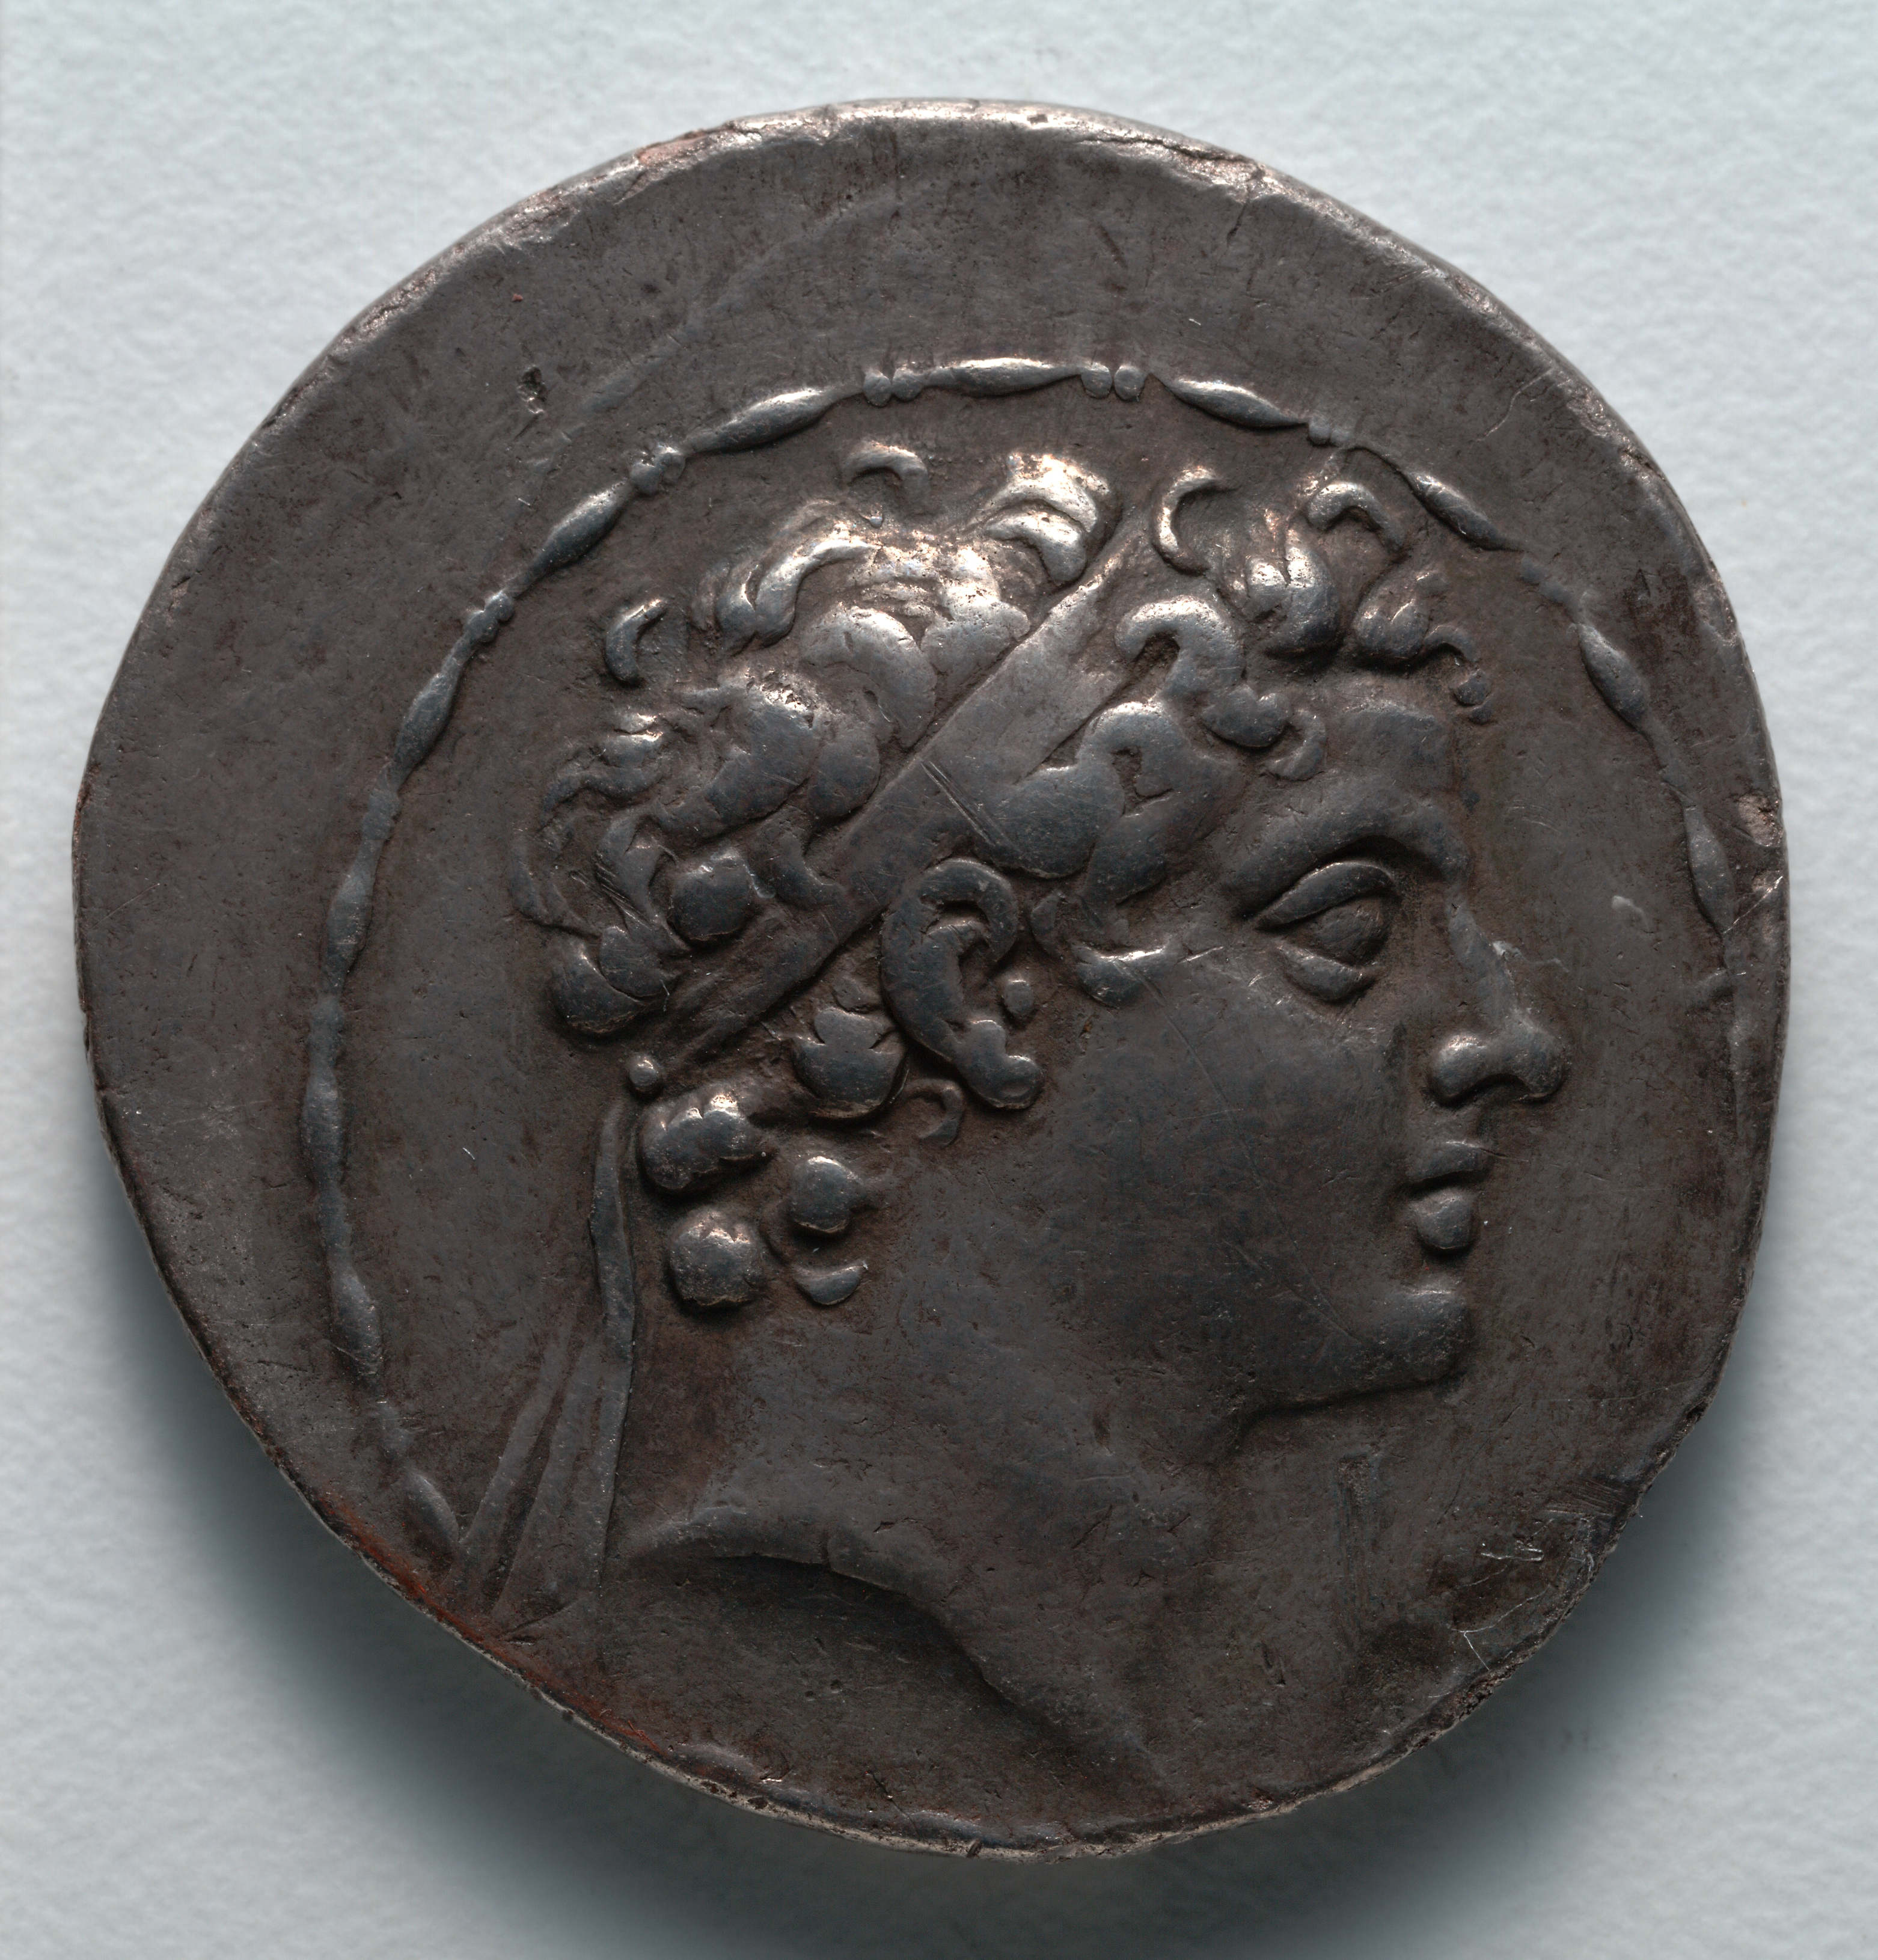 Tetradrachm: Head of Antiochos V (obverse)